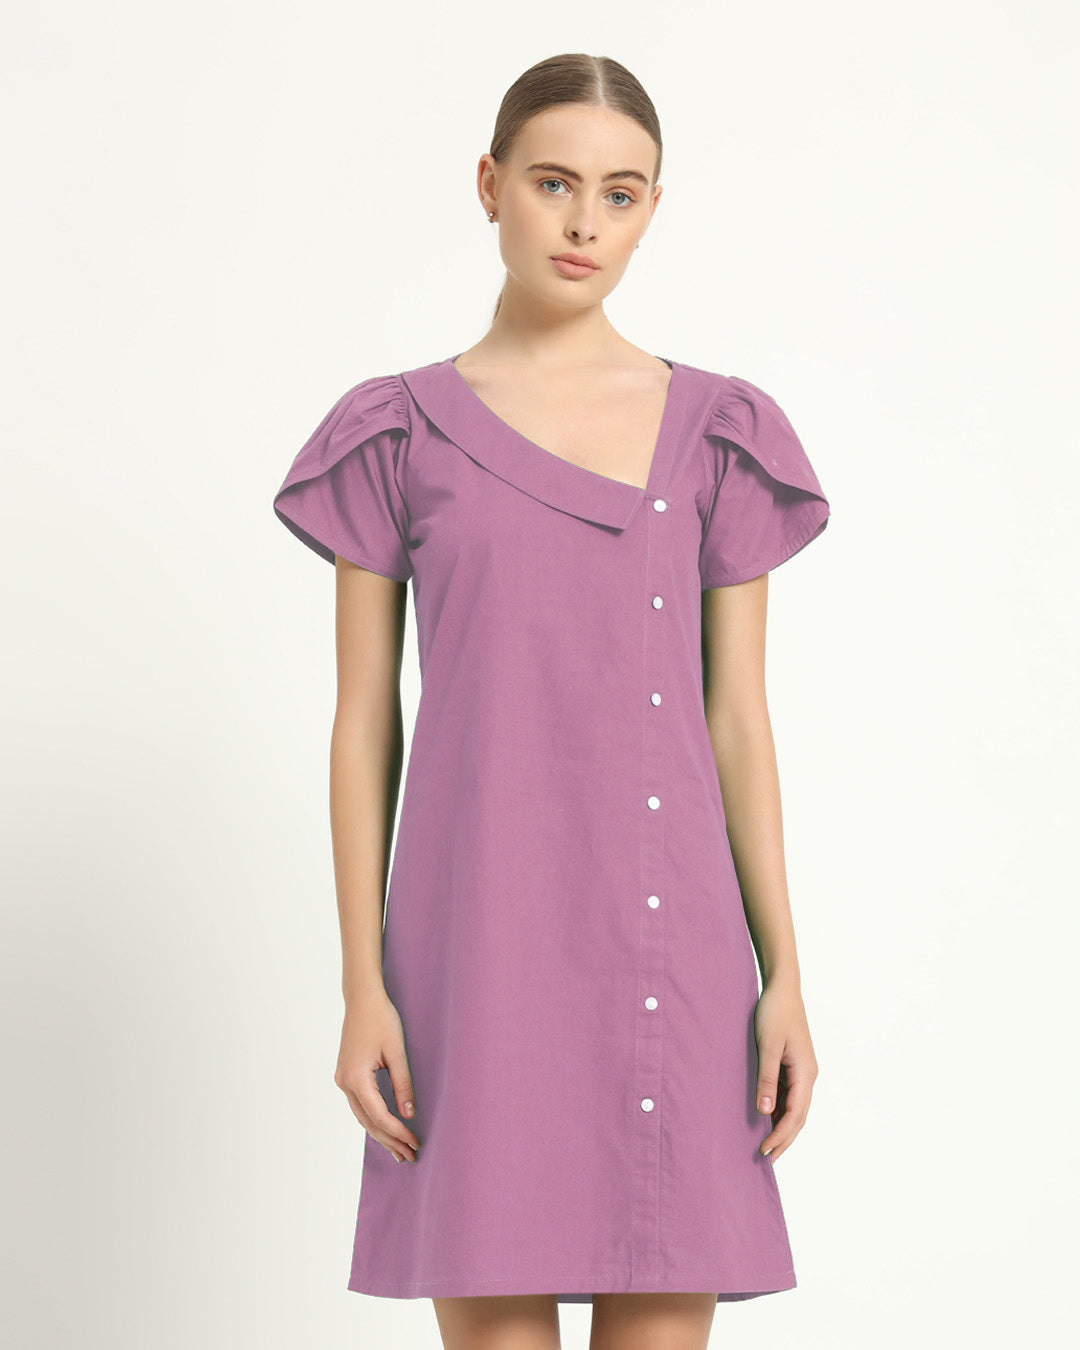 The Krensdorf Purple Swirl Cotton Dress